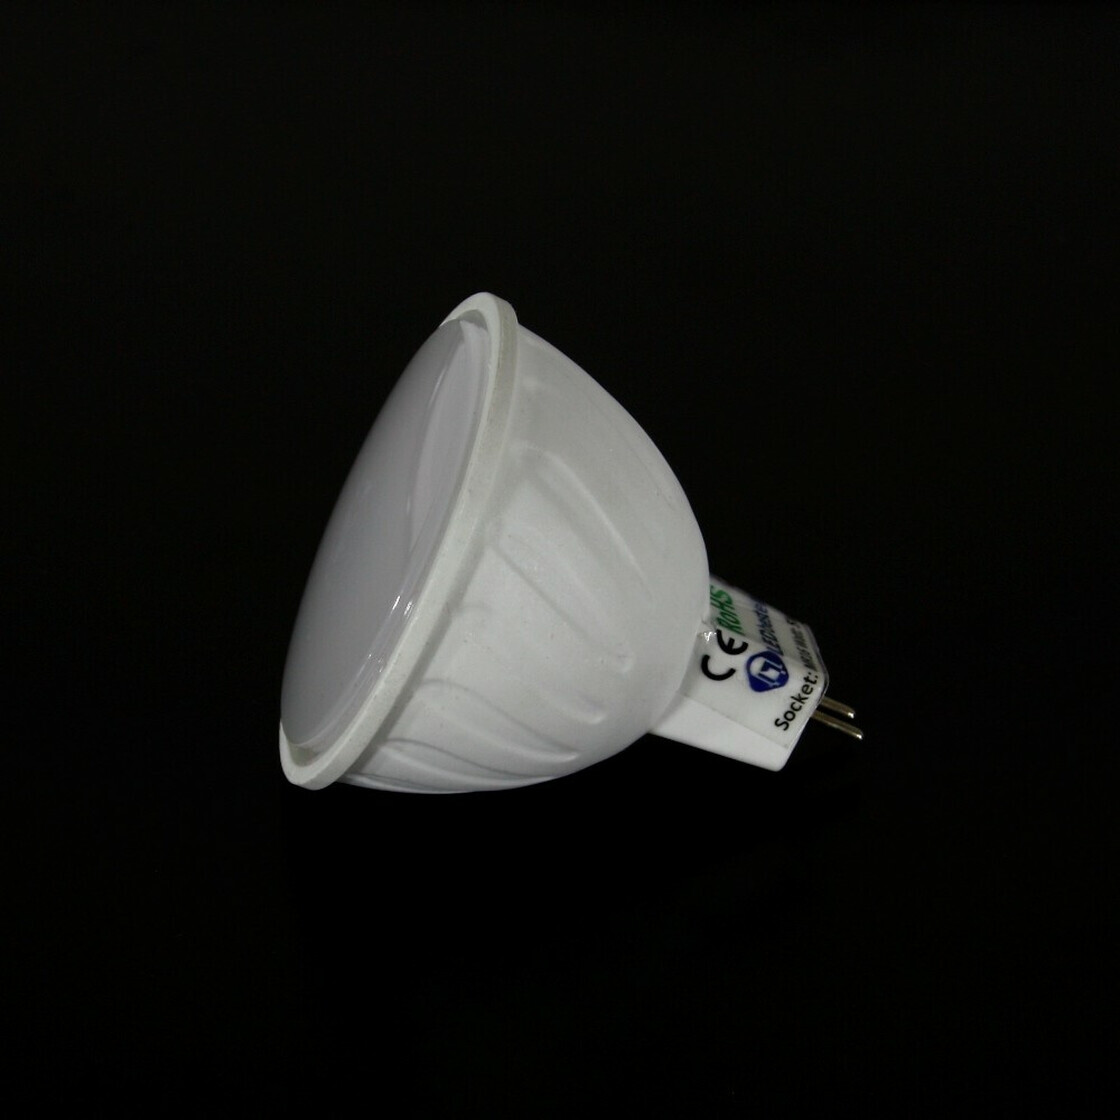 5W GU5.3 MR16 LED Leuchtmittel 3200K warmweiß Spot wie 40W Lampe